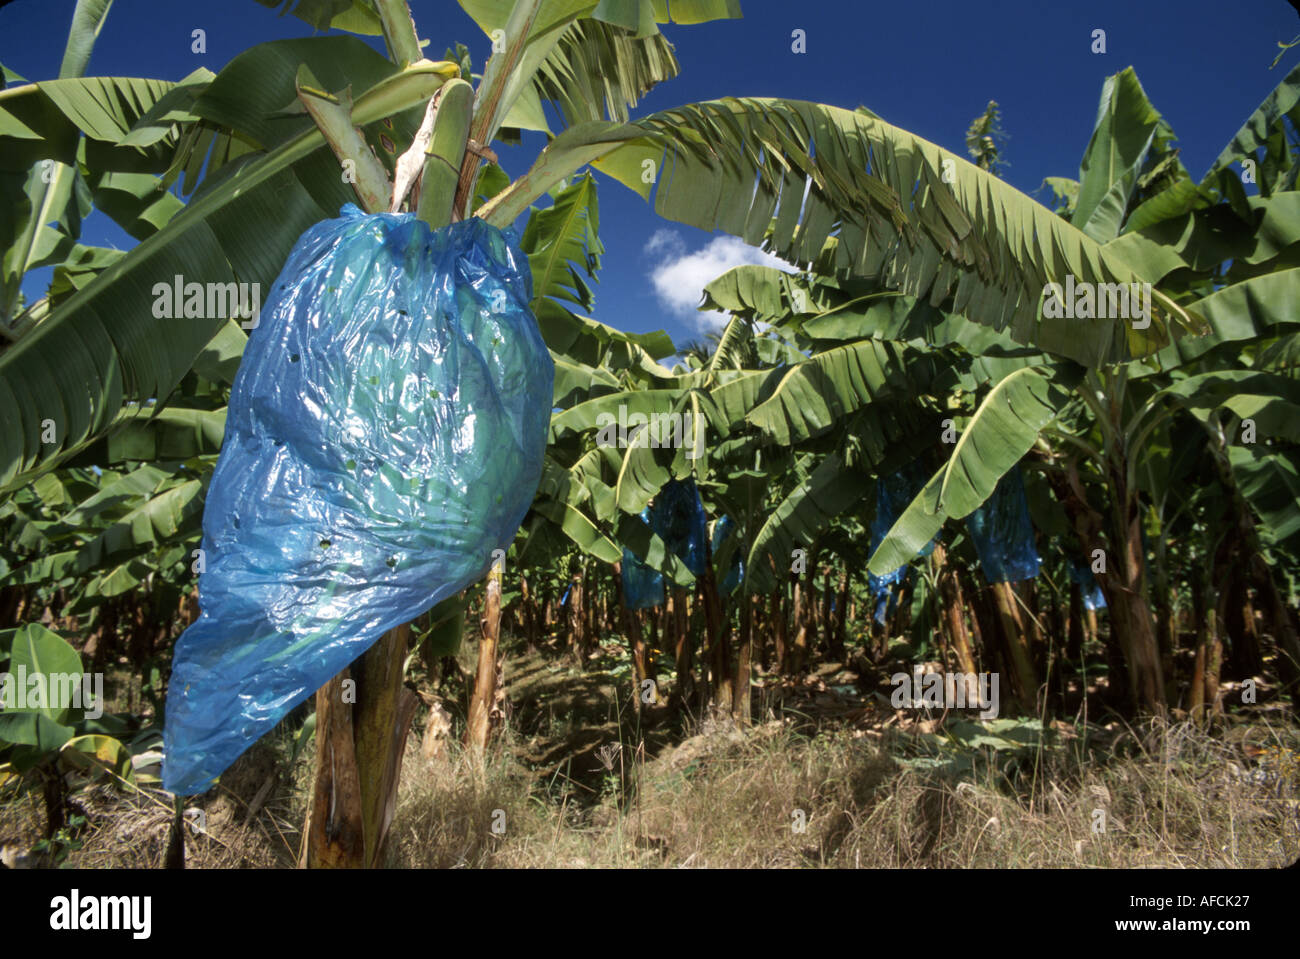 St. Lucia,West Indies,Windward Islands,Eastern Caribbean,Lesser Antilles,Tropics,warm weather,climate,Cul de Sac Banana Plantation,blue bags protect r Stock Photo